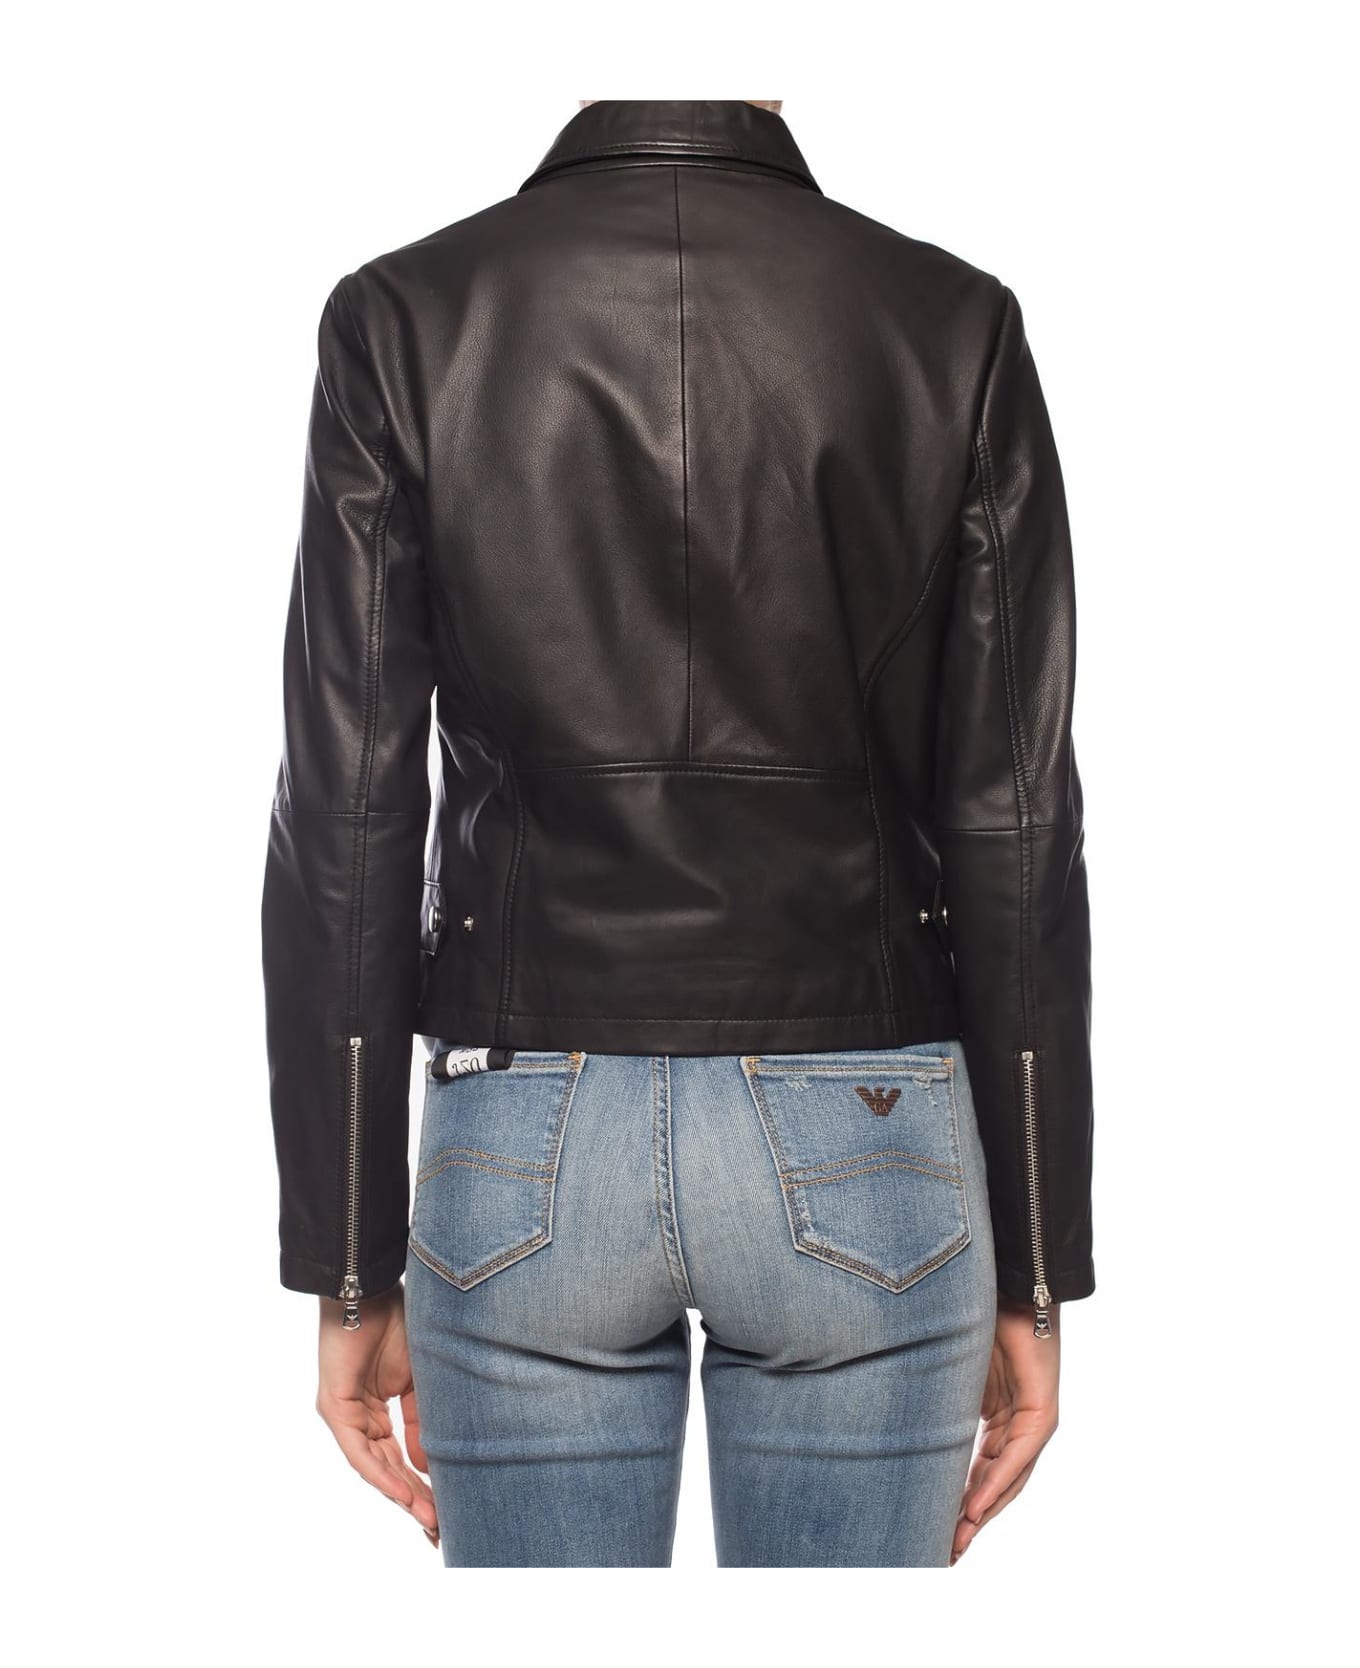 Giorgio Armani Leather Jacket - Nero レザージャケット